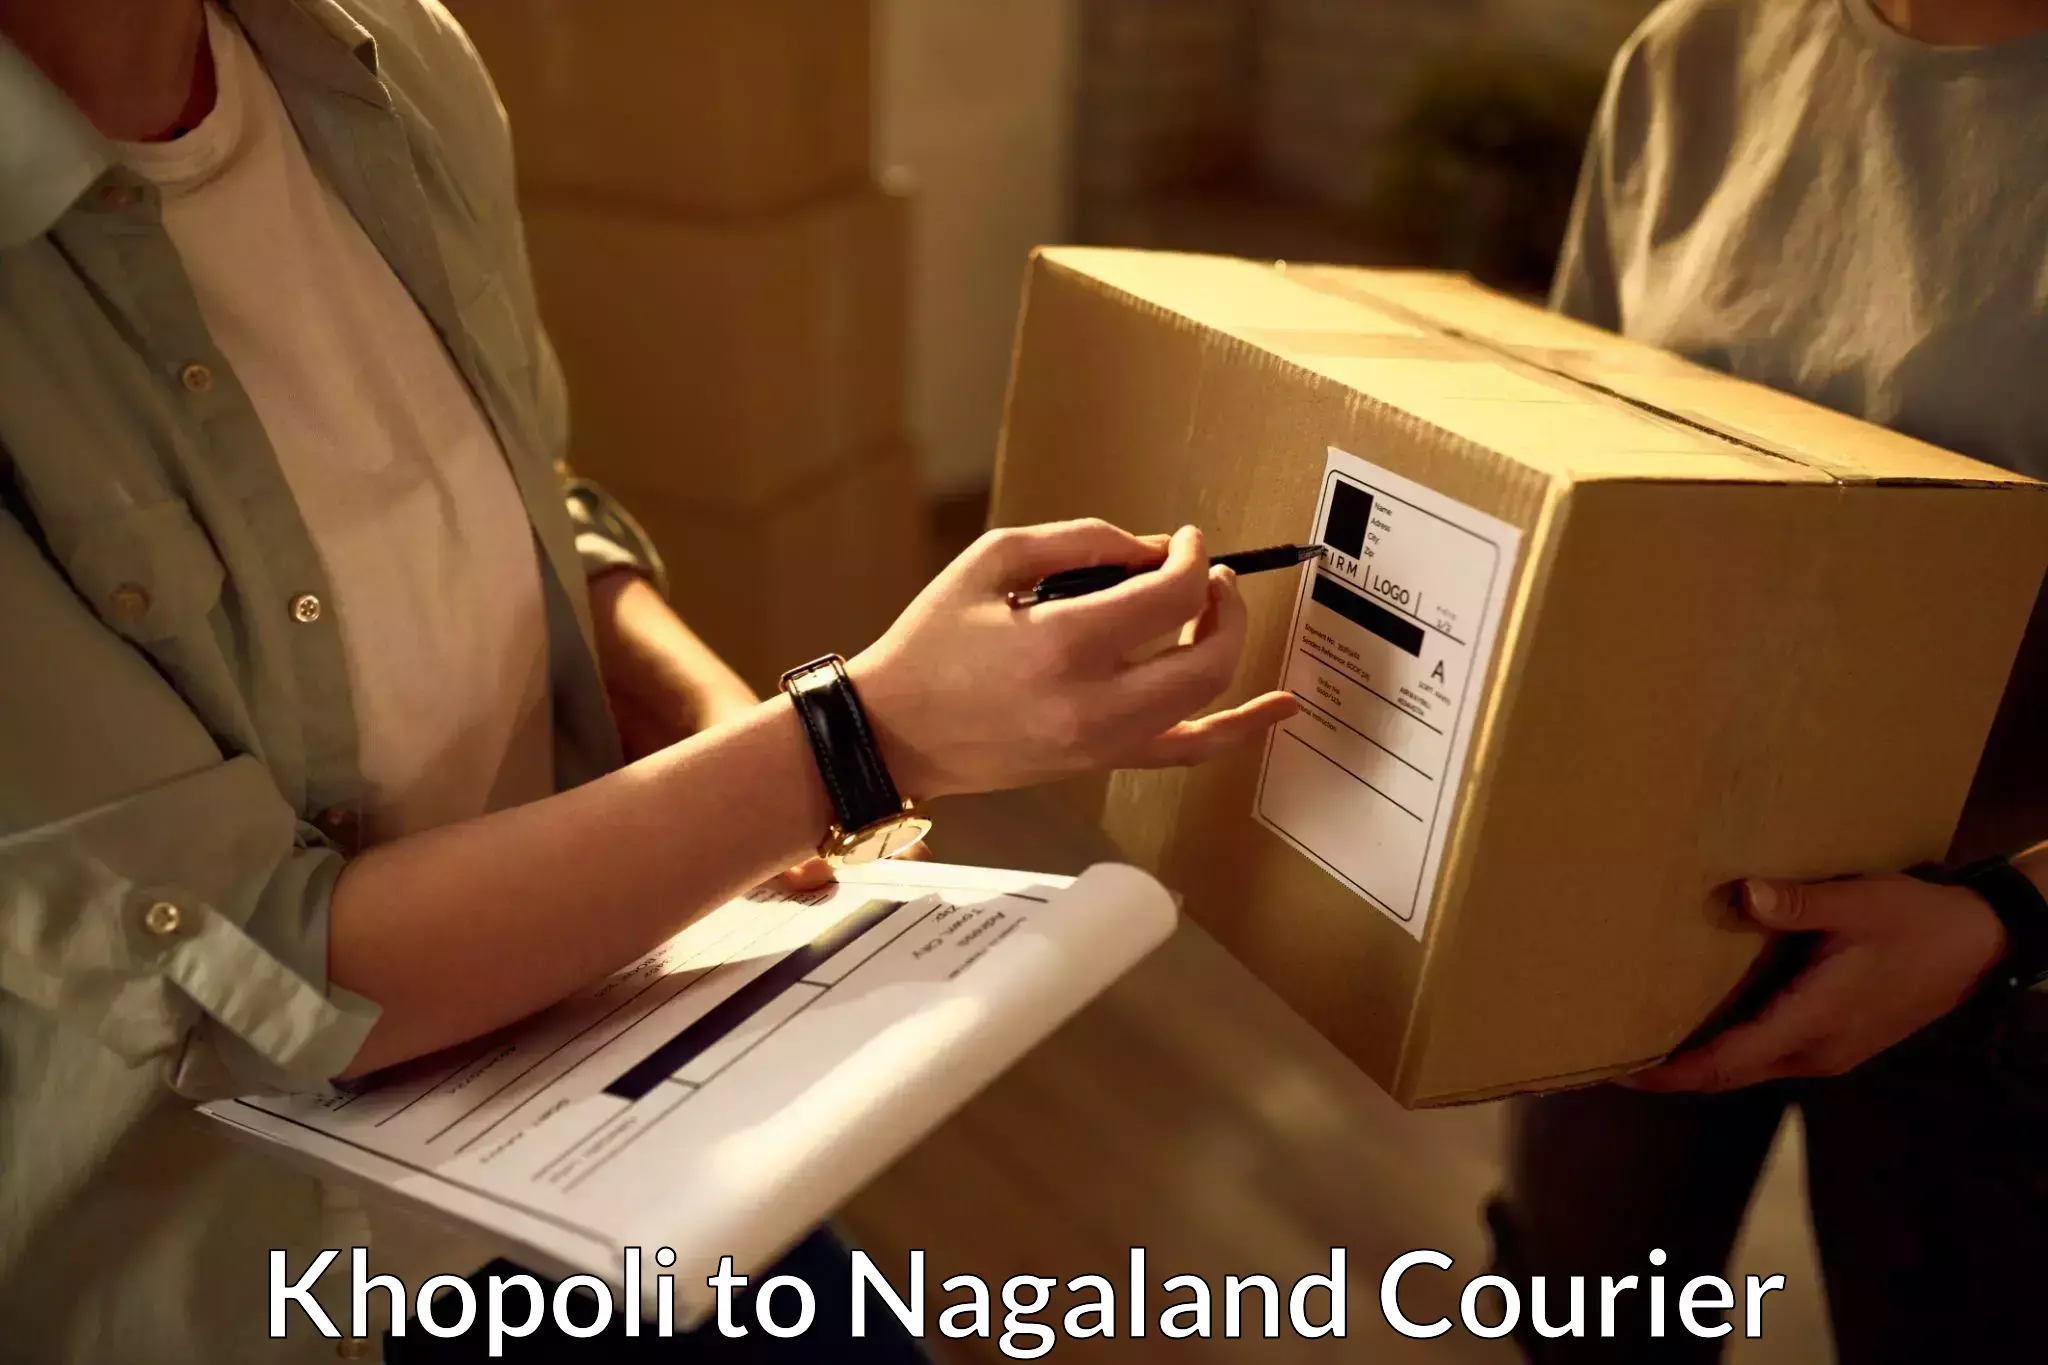 Cash on delivery service Khopoli to Nagaland